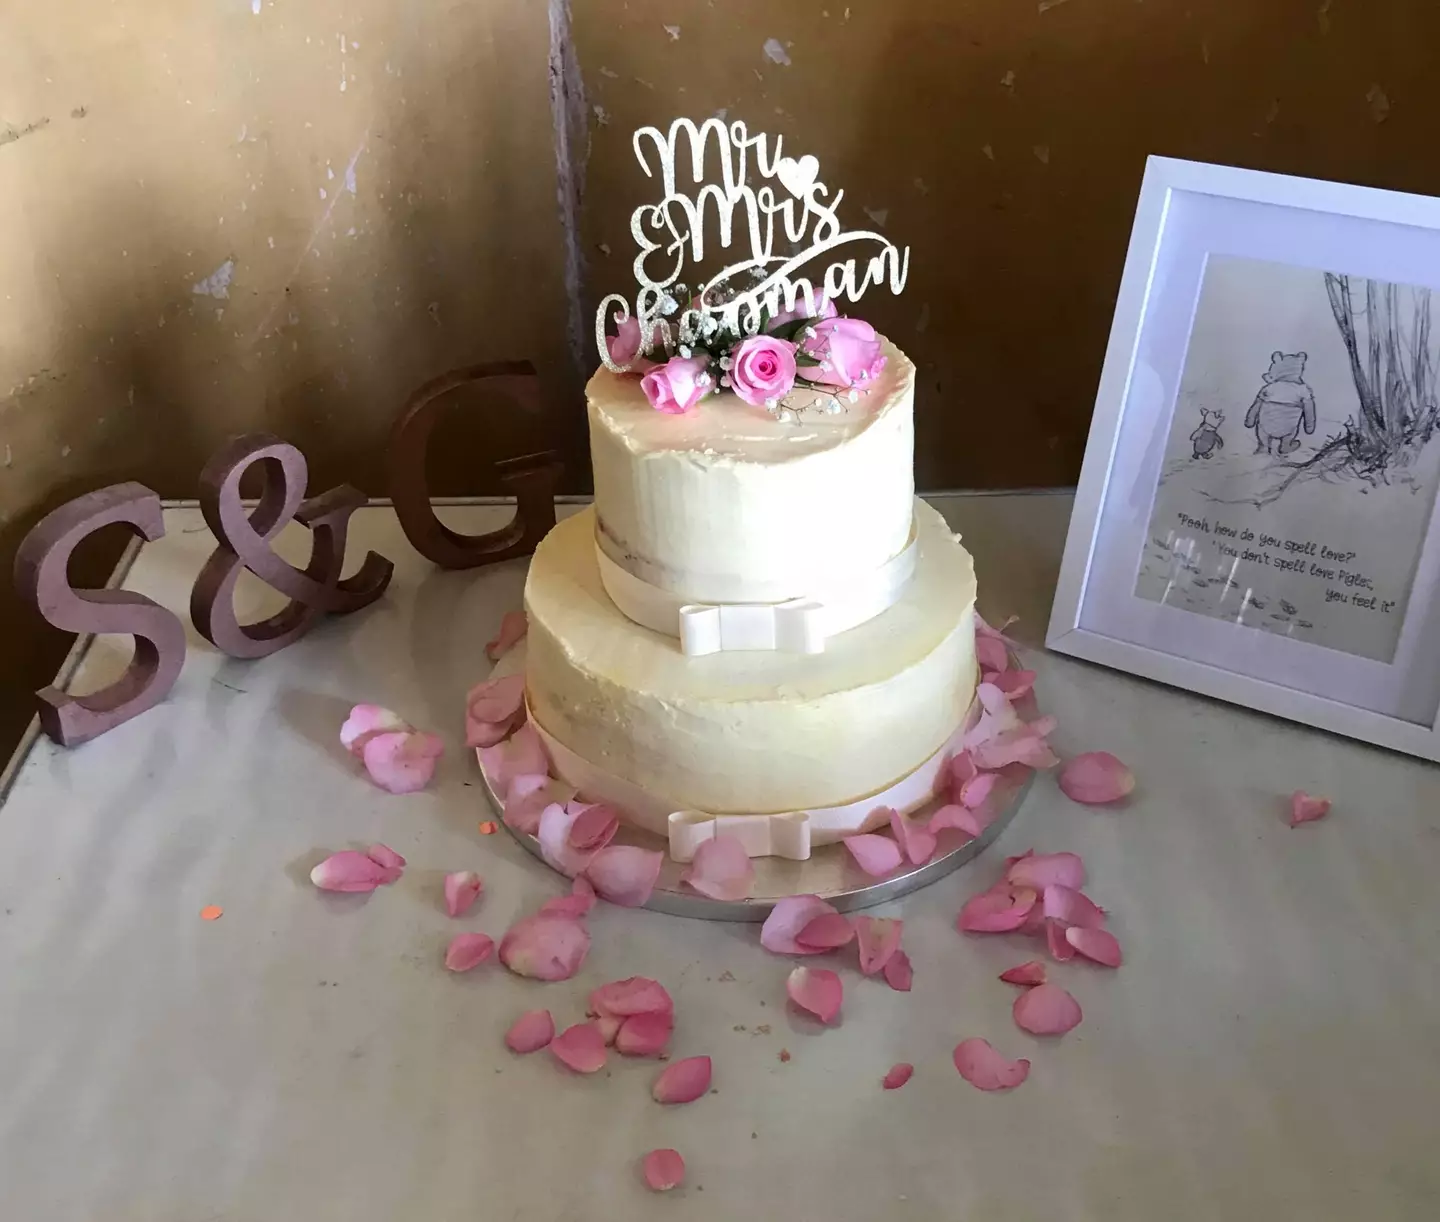 A friend baked her a cake as a wedding present (